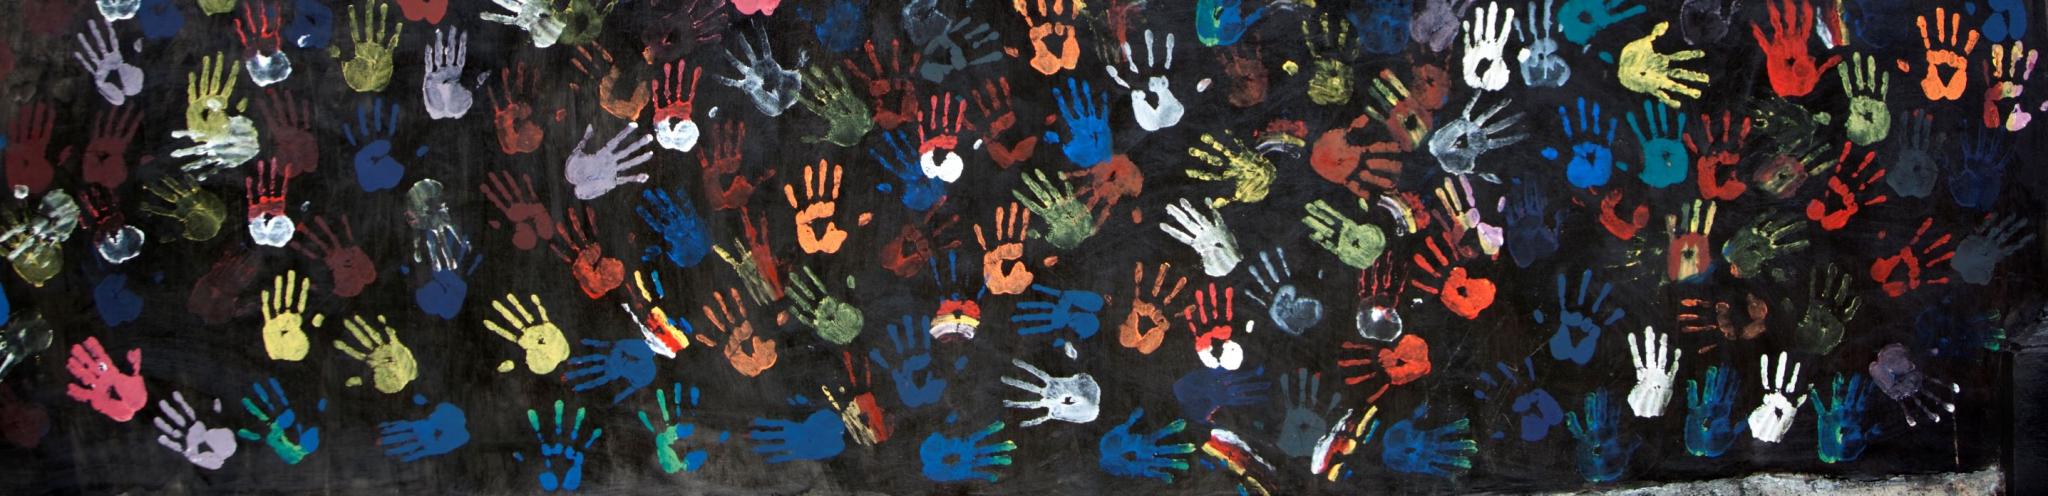 colourful handprints